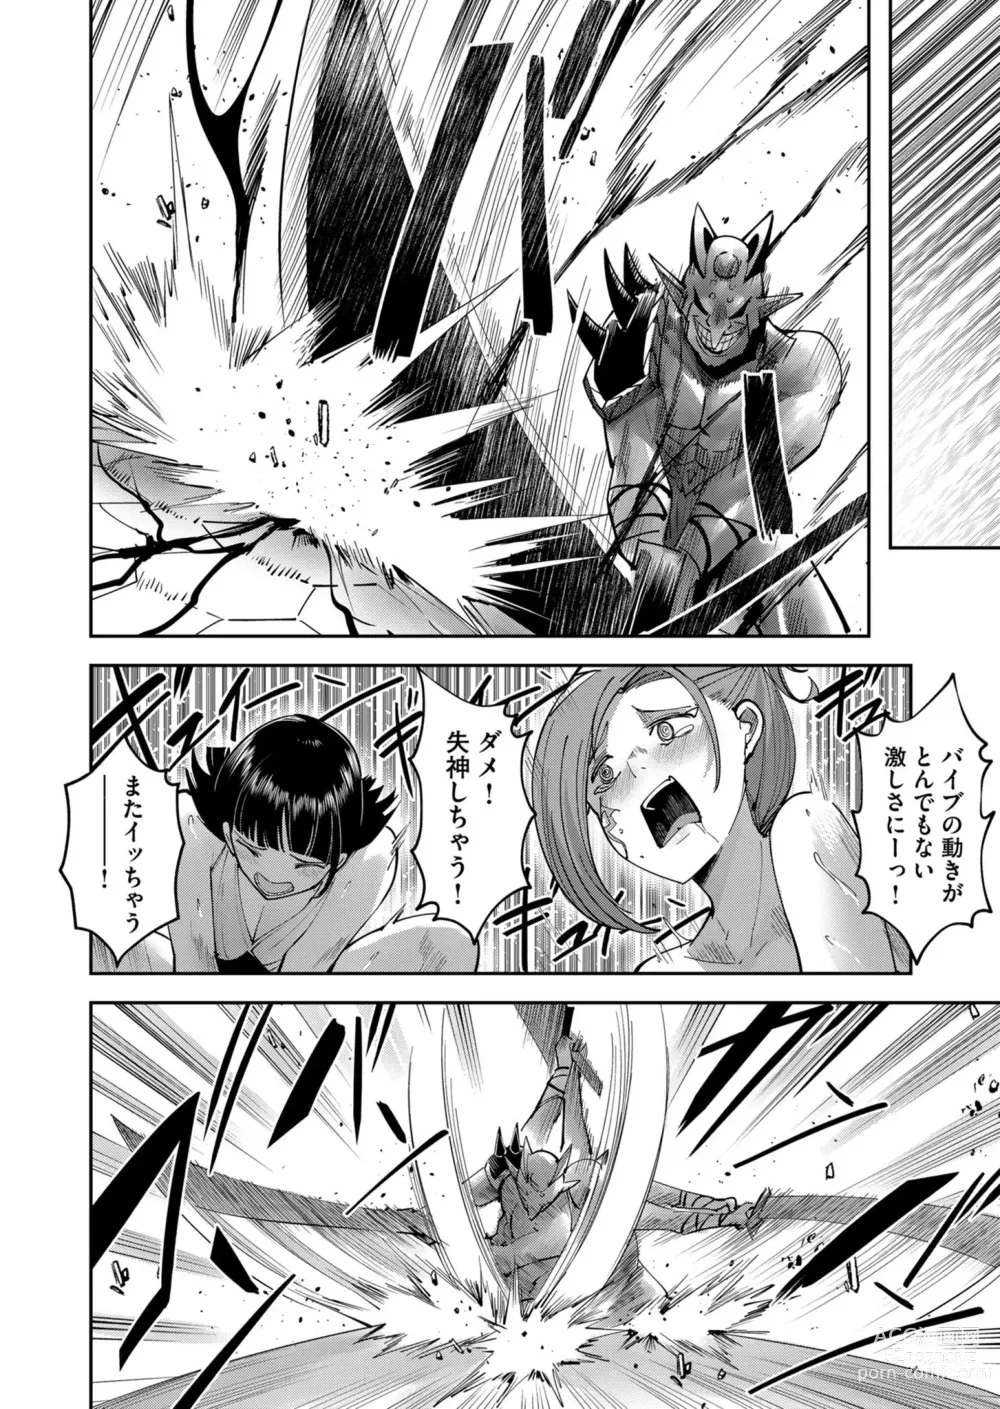 Page 16 of manga Kichiku Eiyuu Vol.05